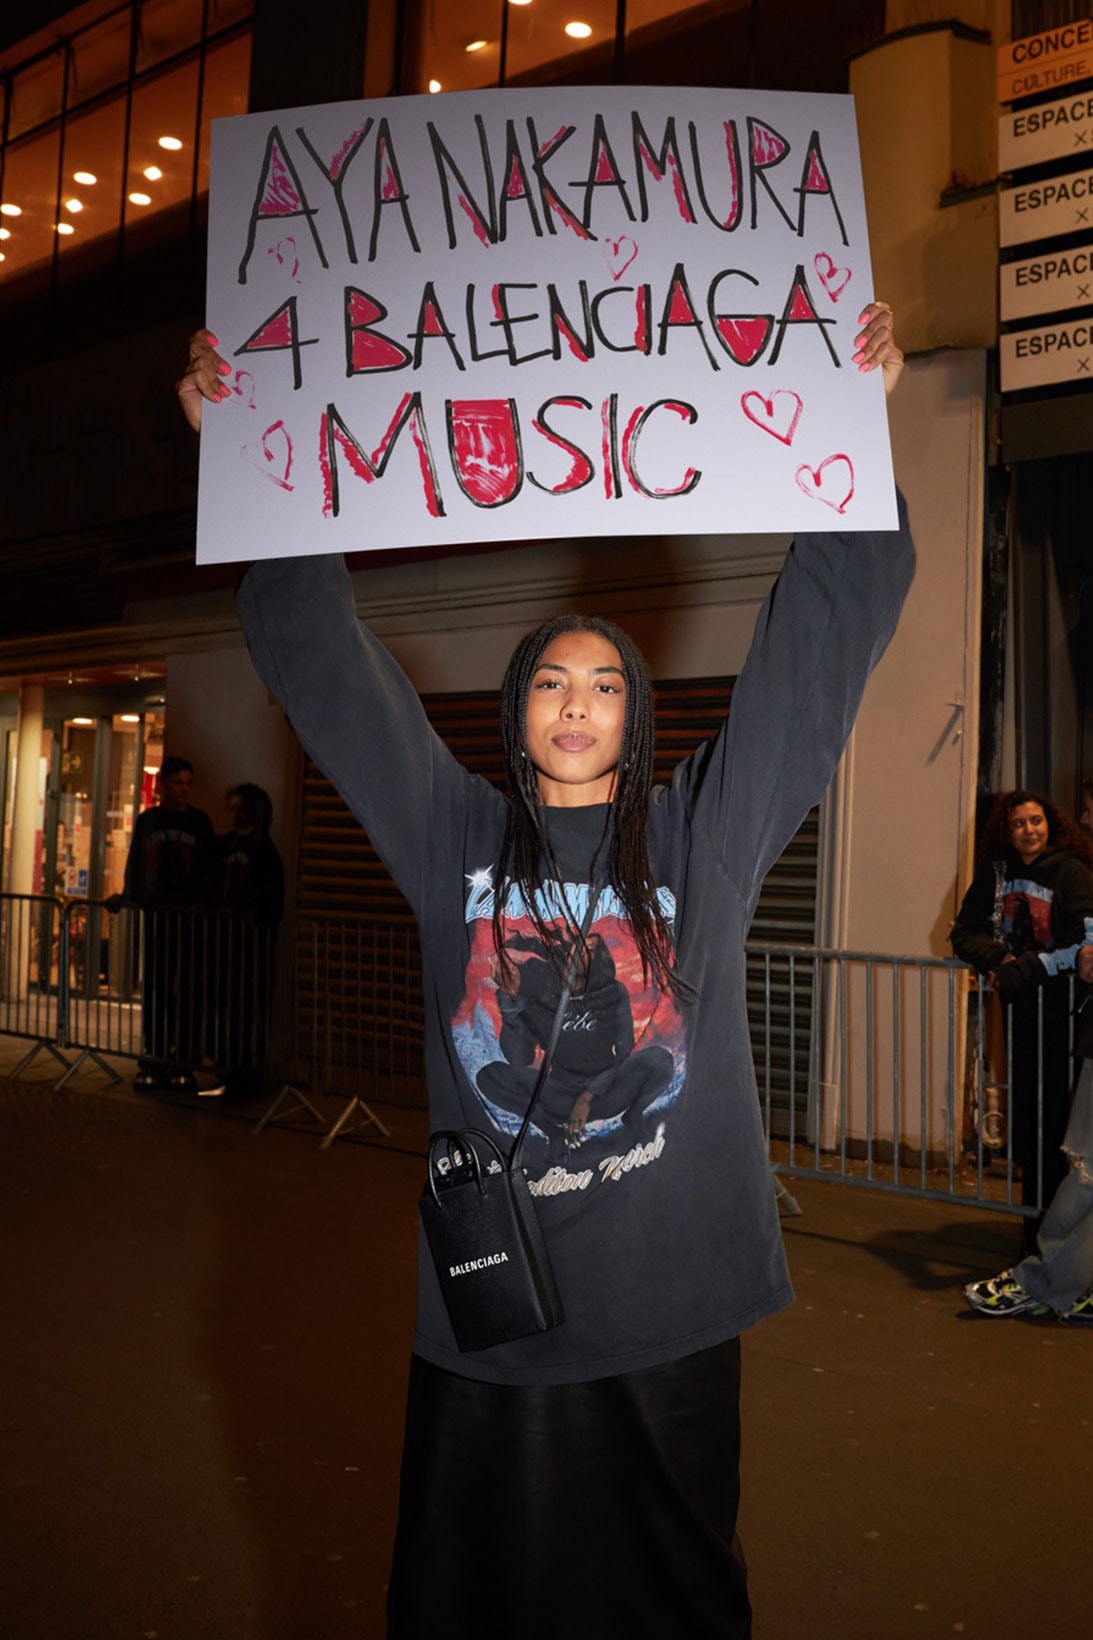 Balenciaga Aya Nakamura Merch Playlist Apple Music Listen Release Info